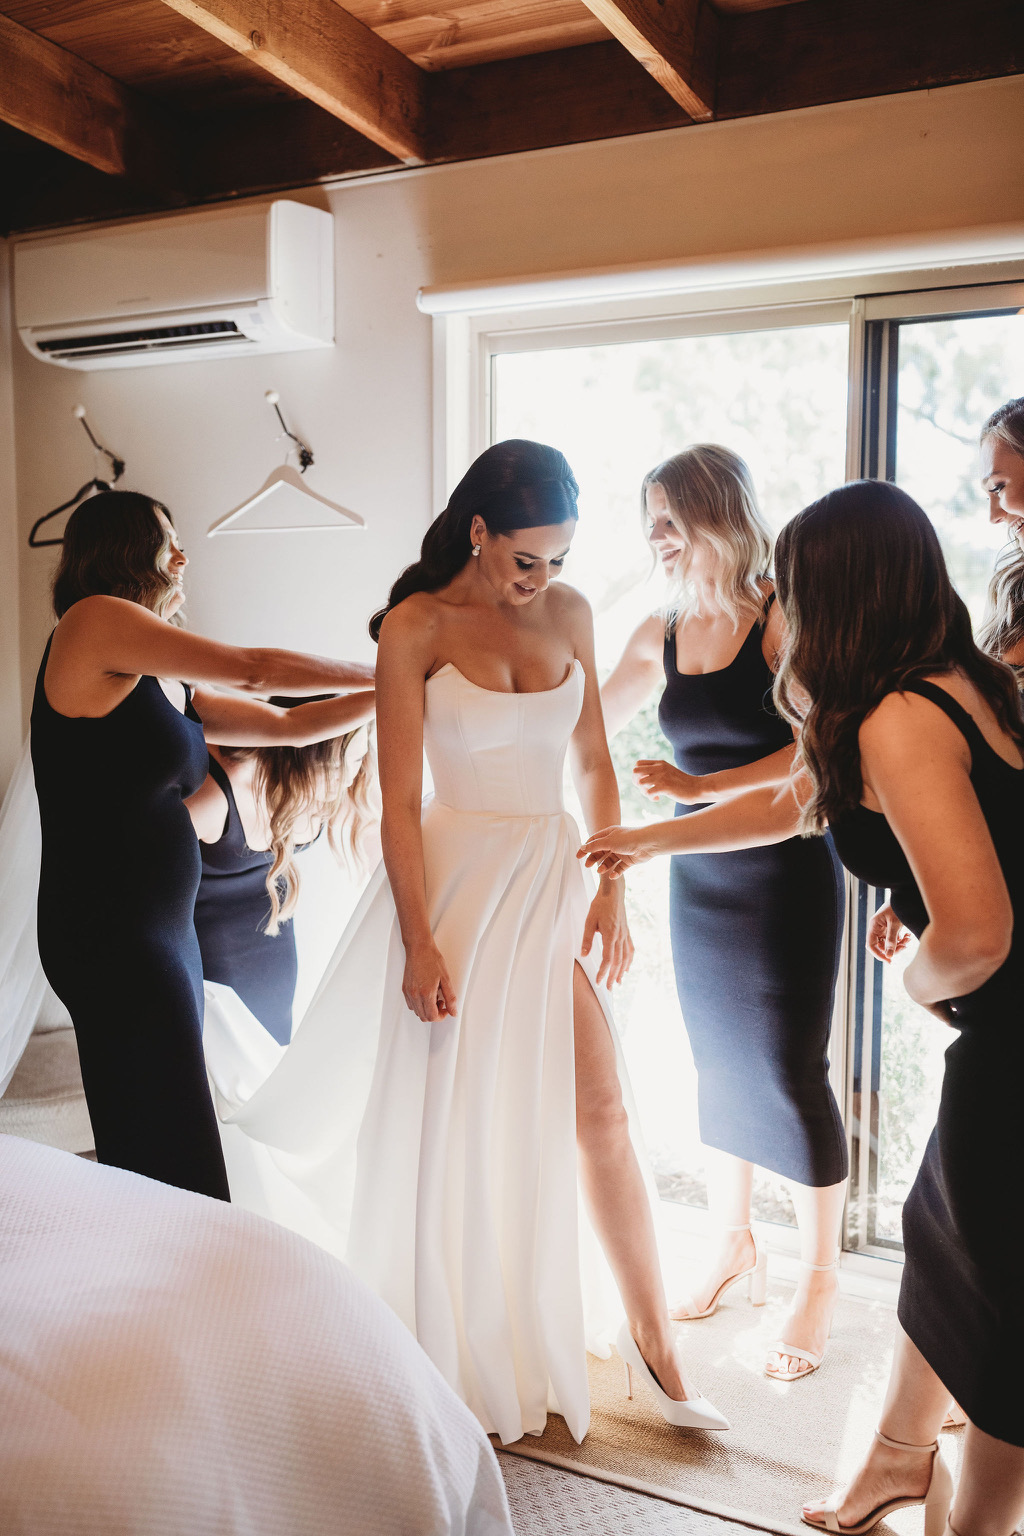 Simple A-line wedding dresses